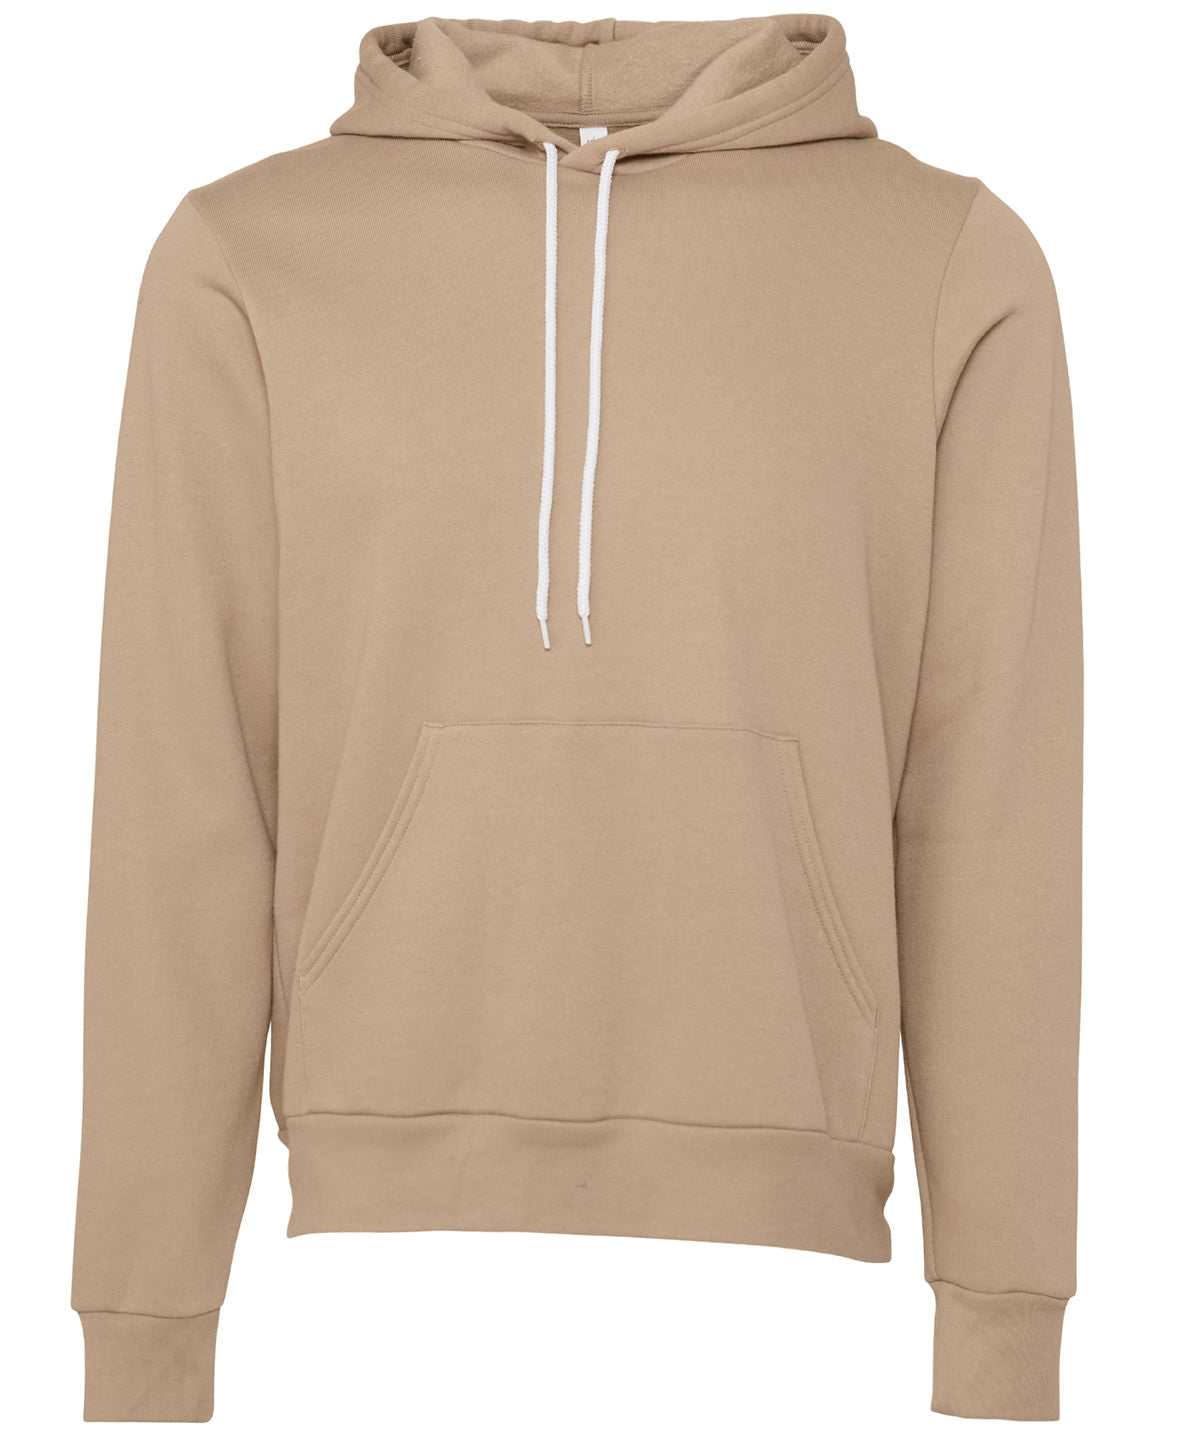 Personalised Hoodies - White Bella Canvas Unisex polycotton fleece pullover hoodie